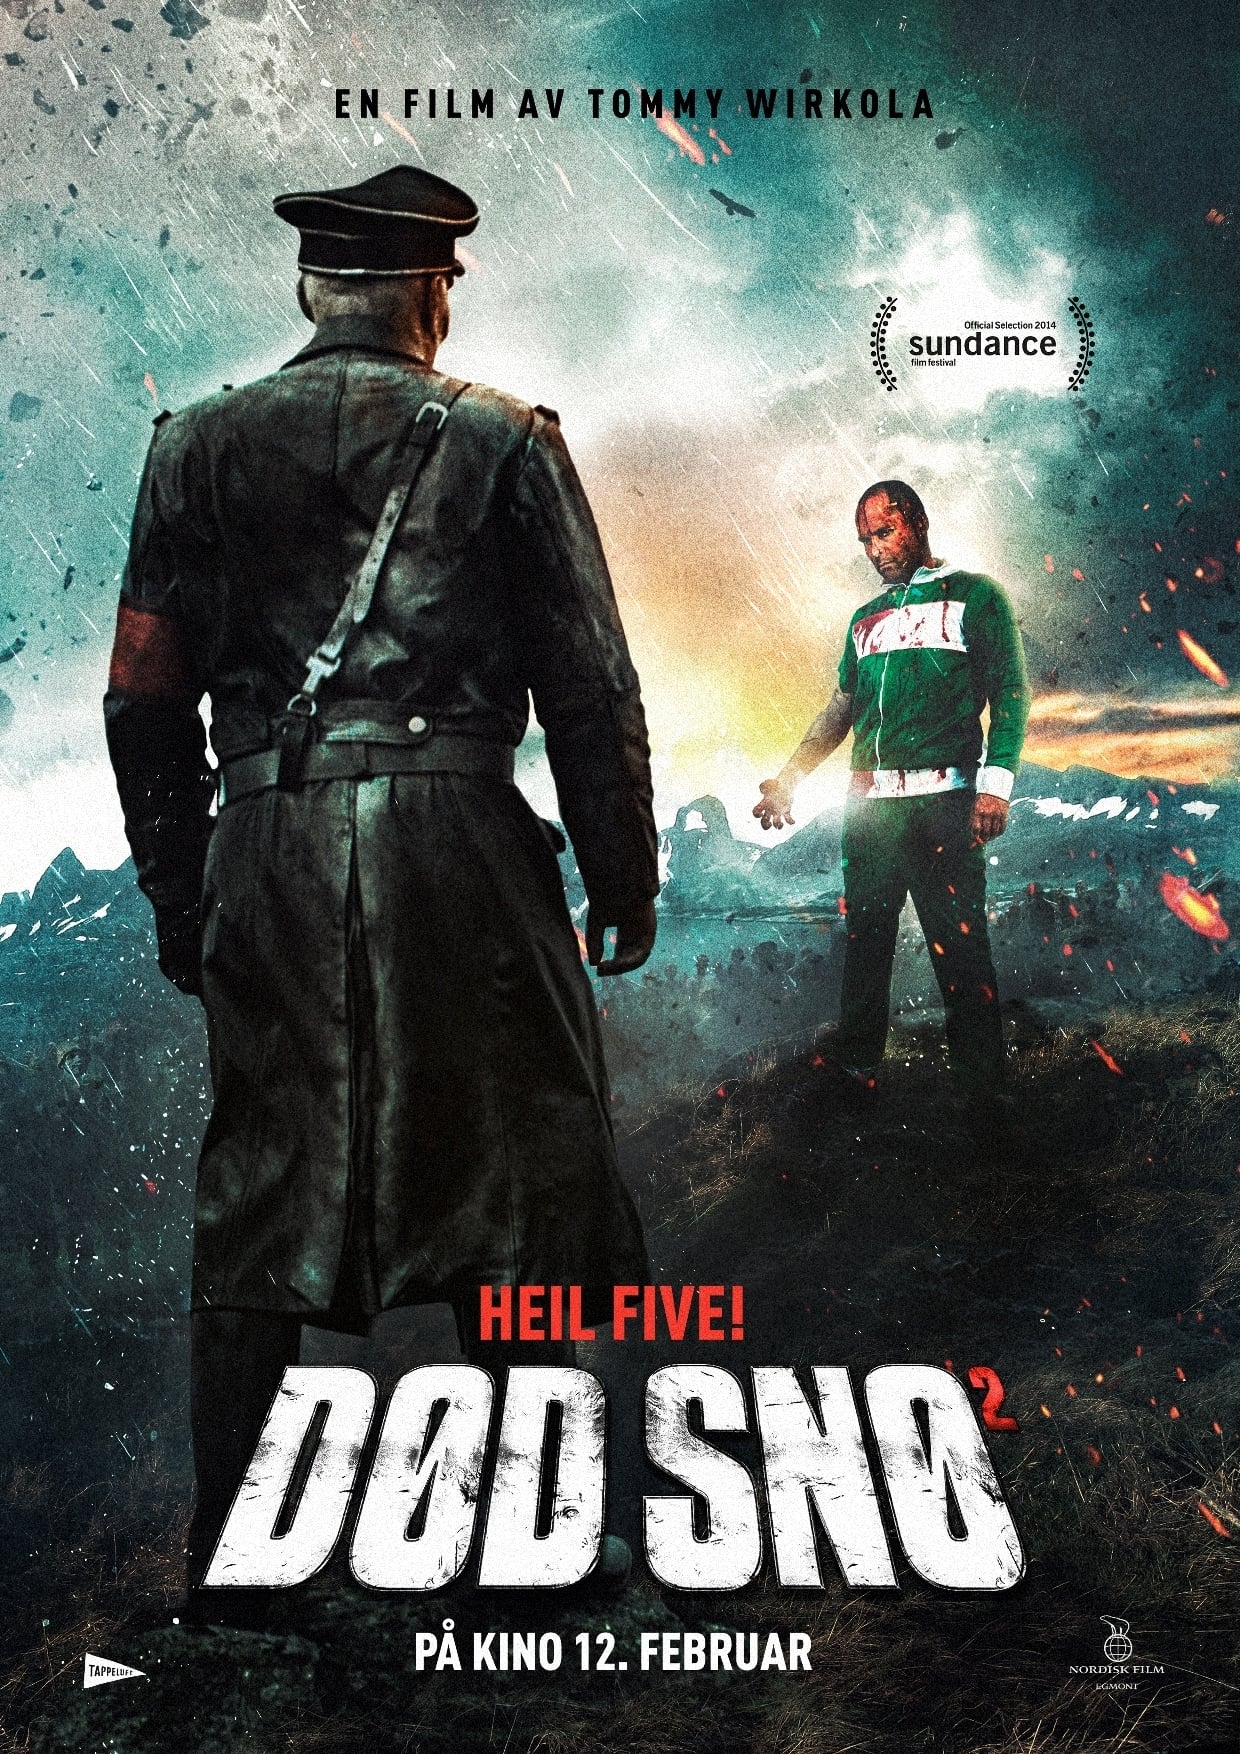 Binh Đoàn Thây Ma 2 (Dead Snow 2: Red vs. Dead) [2014]